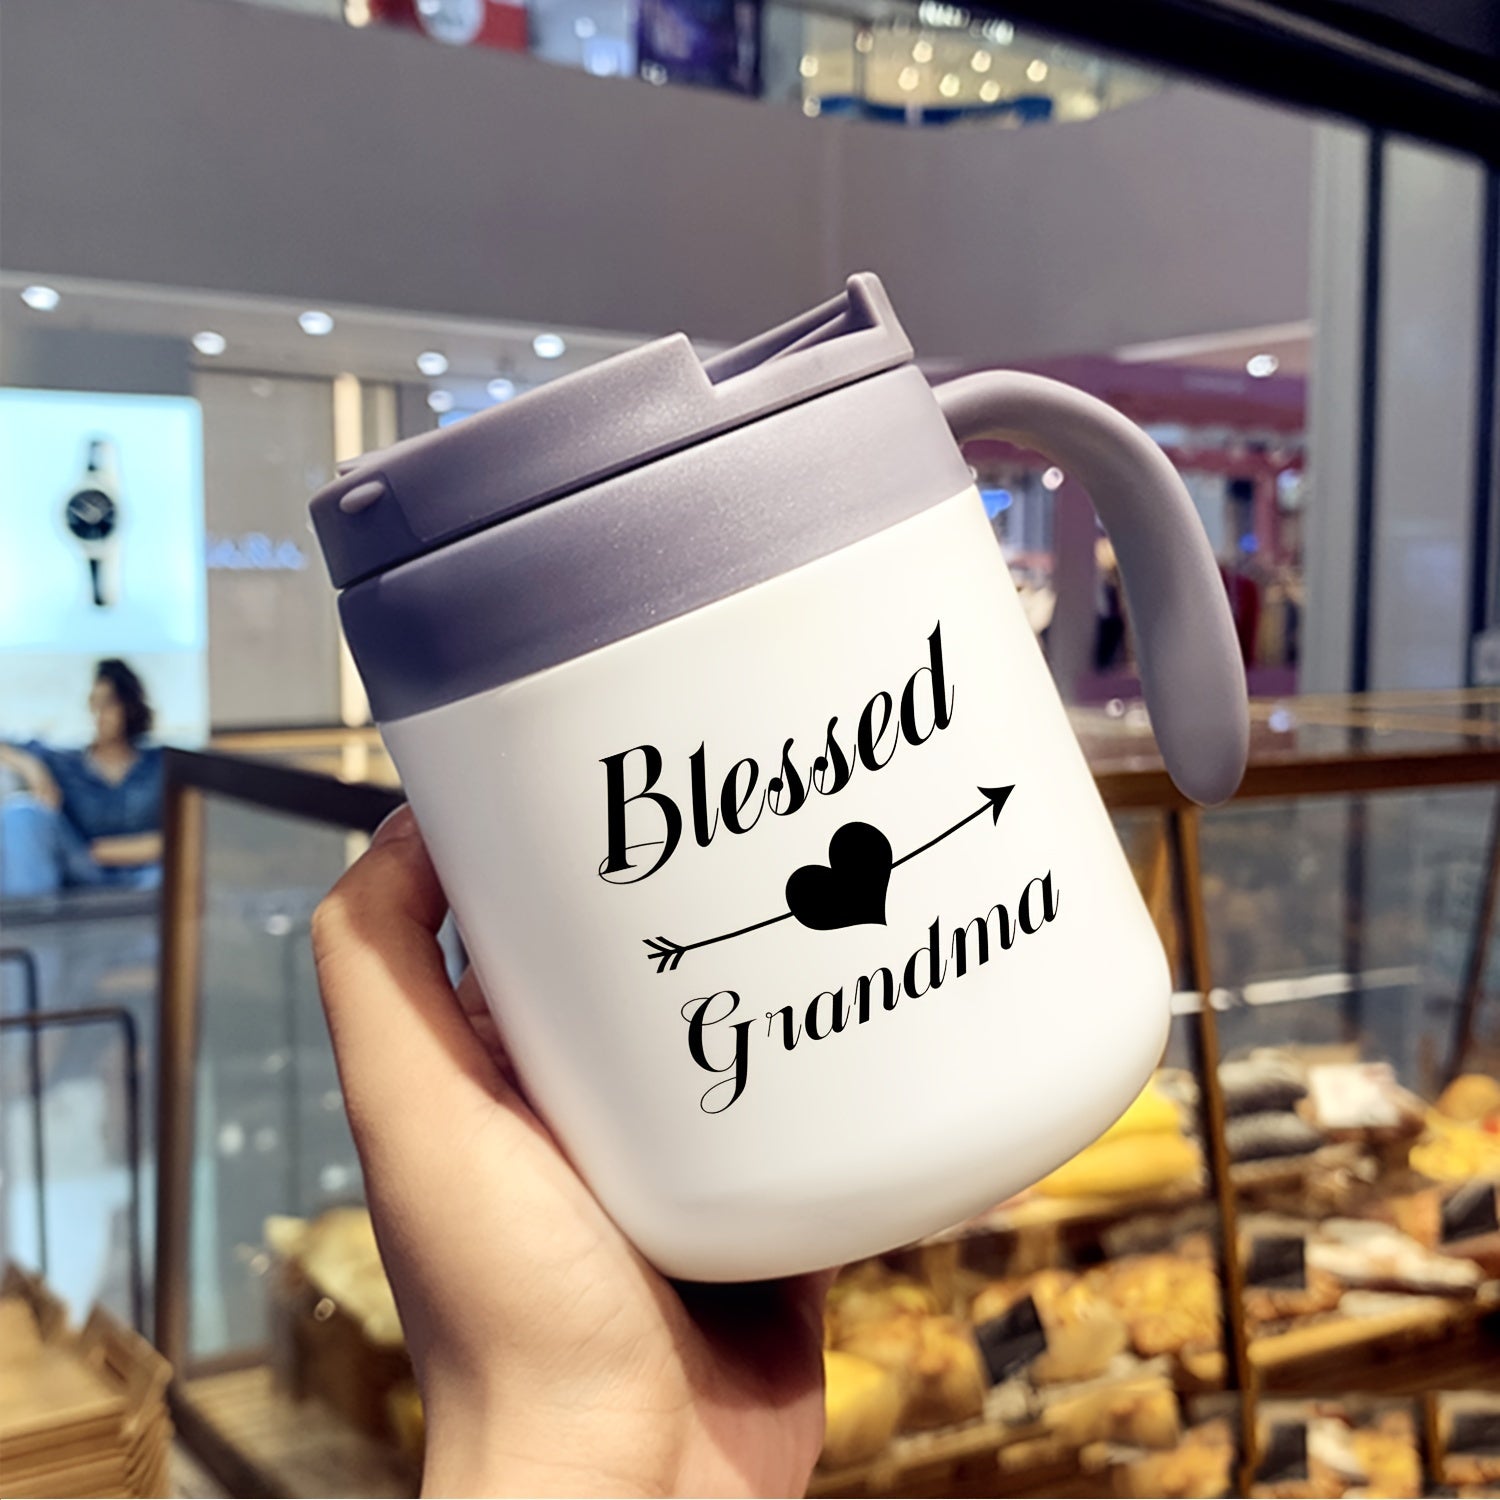 Blessed Grandma Christian Insulated Travel Mug 12 or 17 oz claimedbygoddesigns